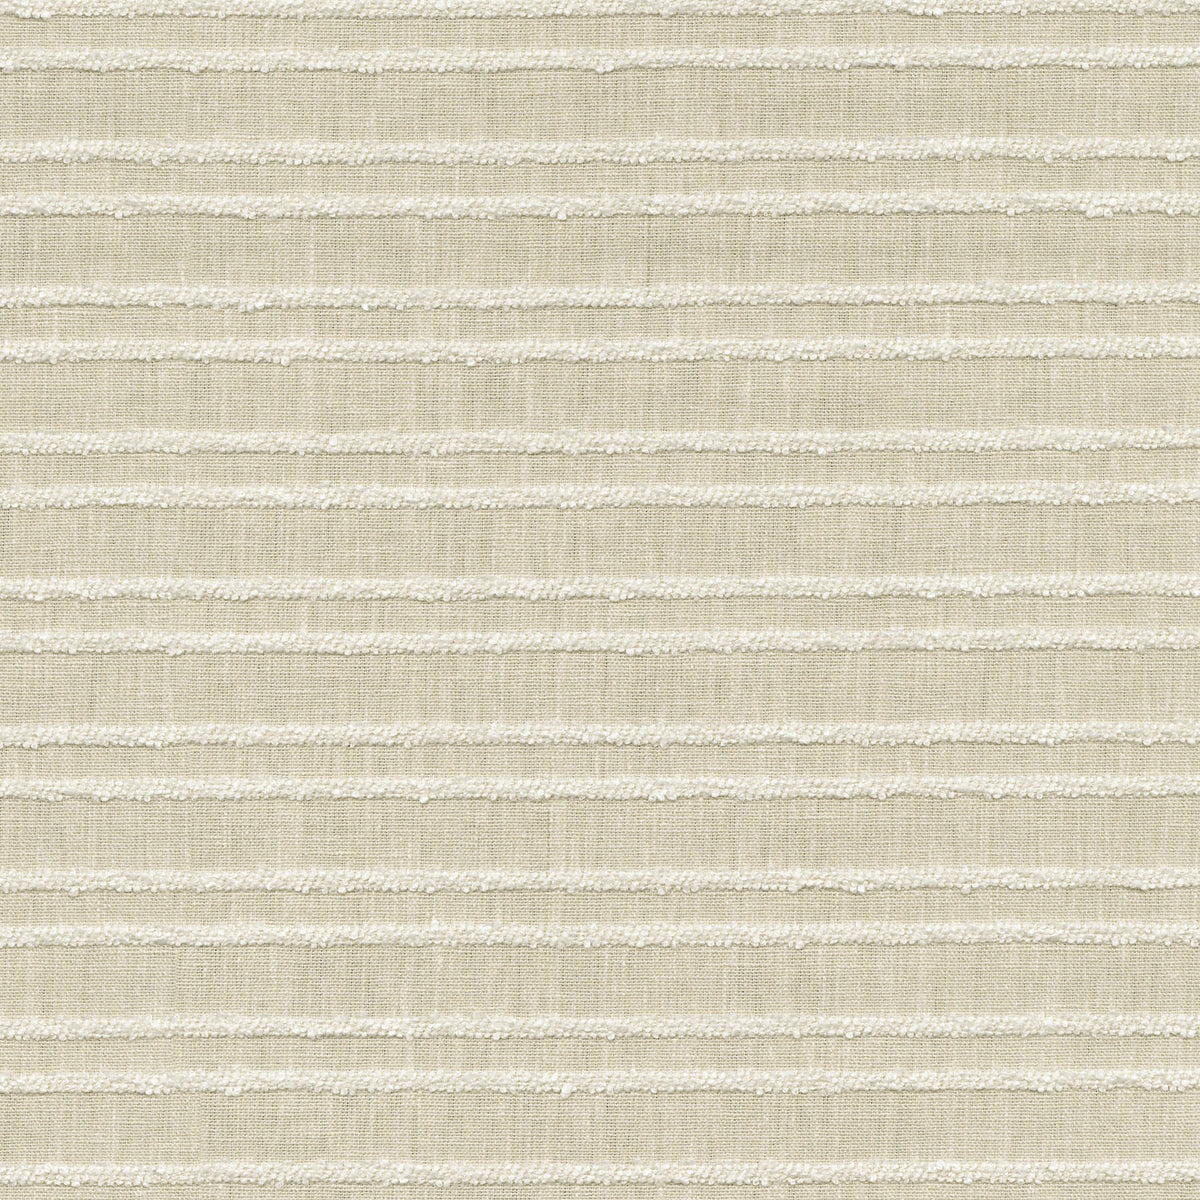 P/K Lifestyles Stanton Stripe - Flax 470804 Upholstery Fabric